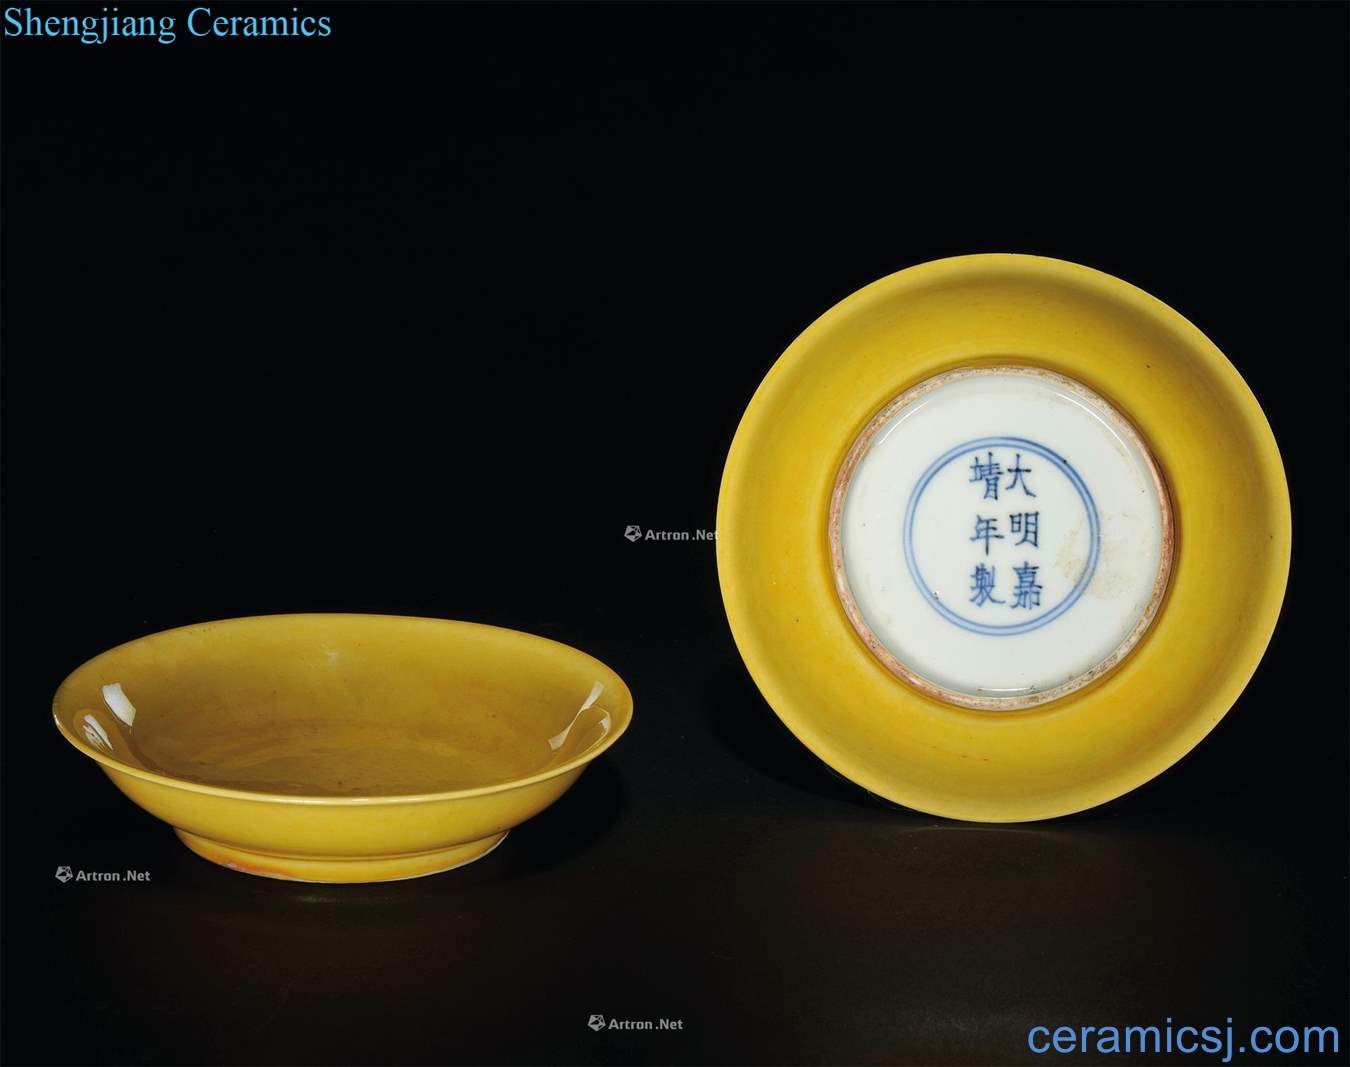 Ming jiajing yellow glaze plate (a)